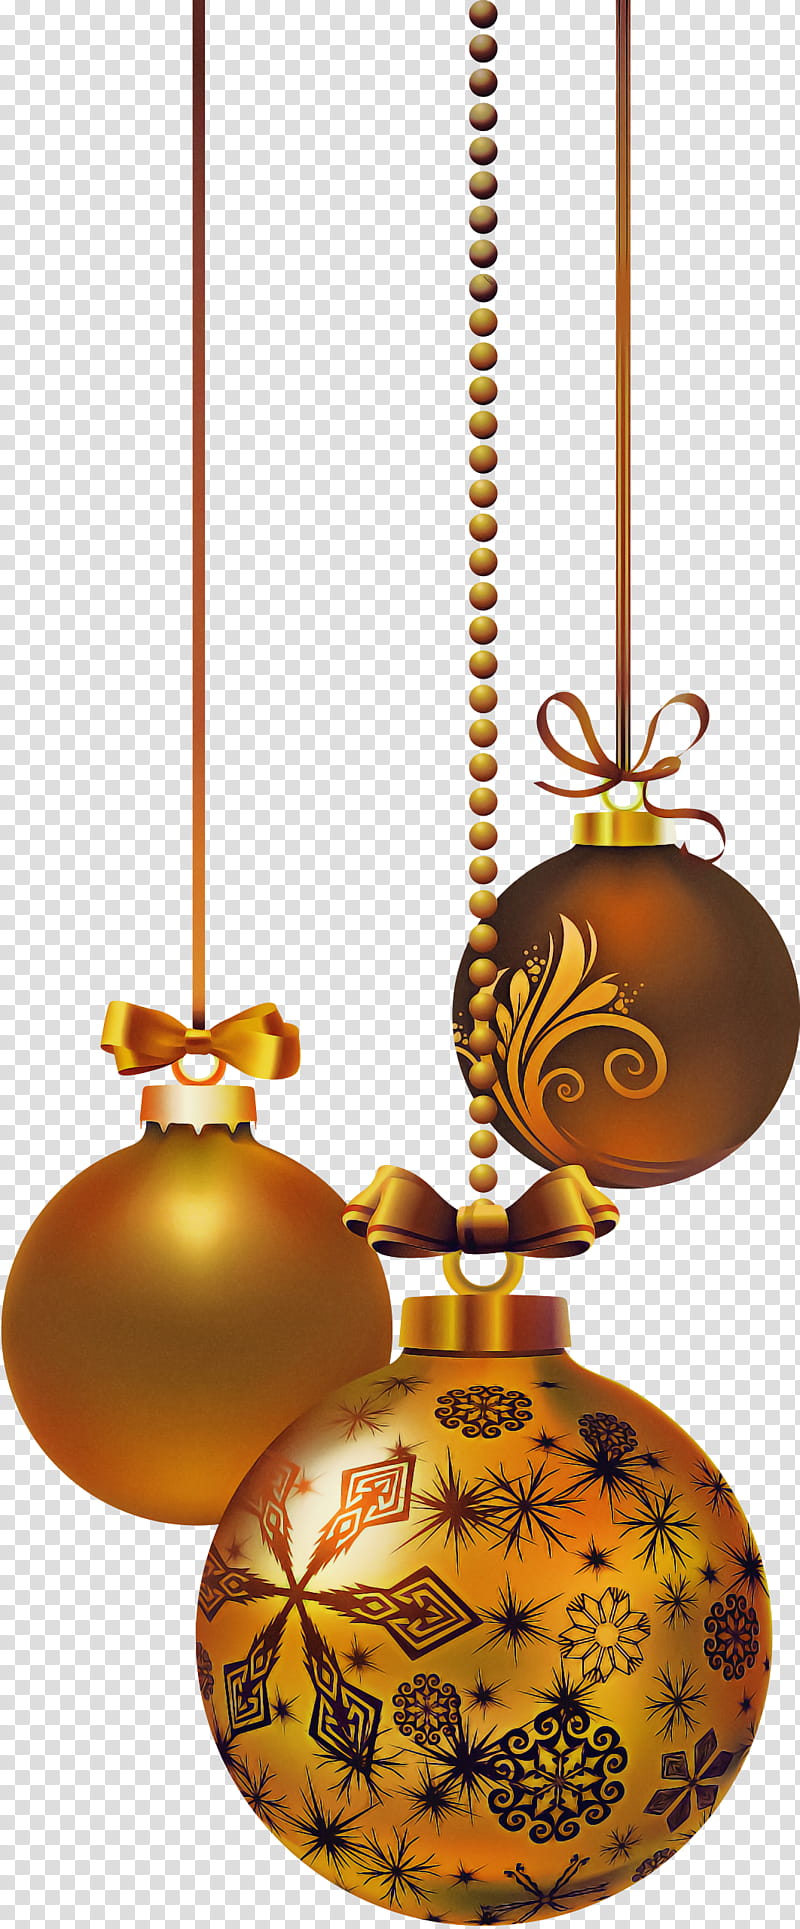 Christmas Bulbs Christmas Balls Christmas bubbles, Christmas Ornaments, Holiday Ornament, Orange, Christmas Decoration, Interior Design, Light Fixture, Metal transparent background PNG clipart